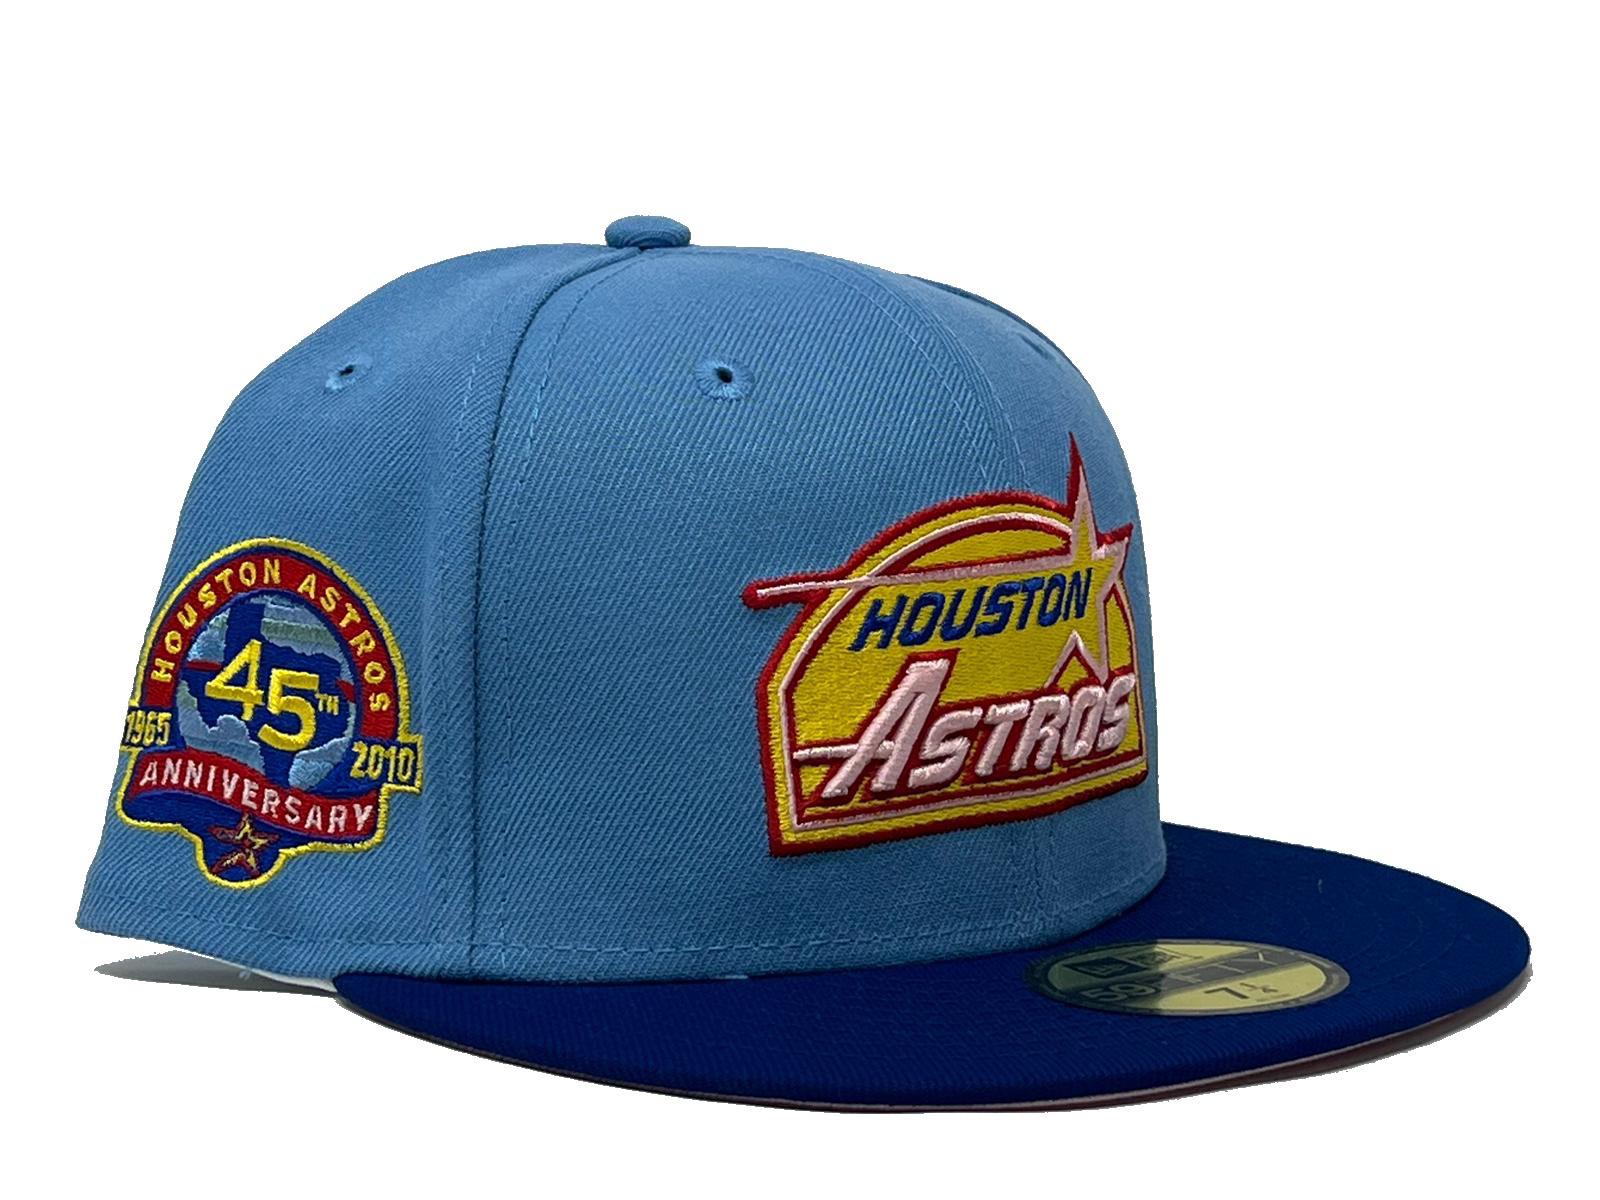 New Era / Hat Club Exclusive Houston Astros Monaco Fitted Hat Sz. 7